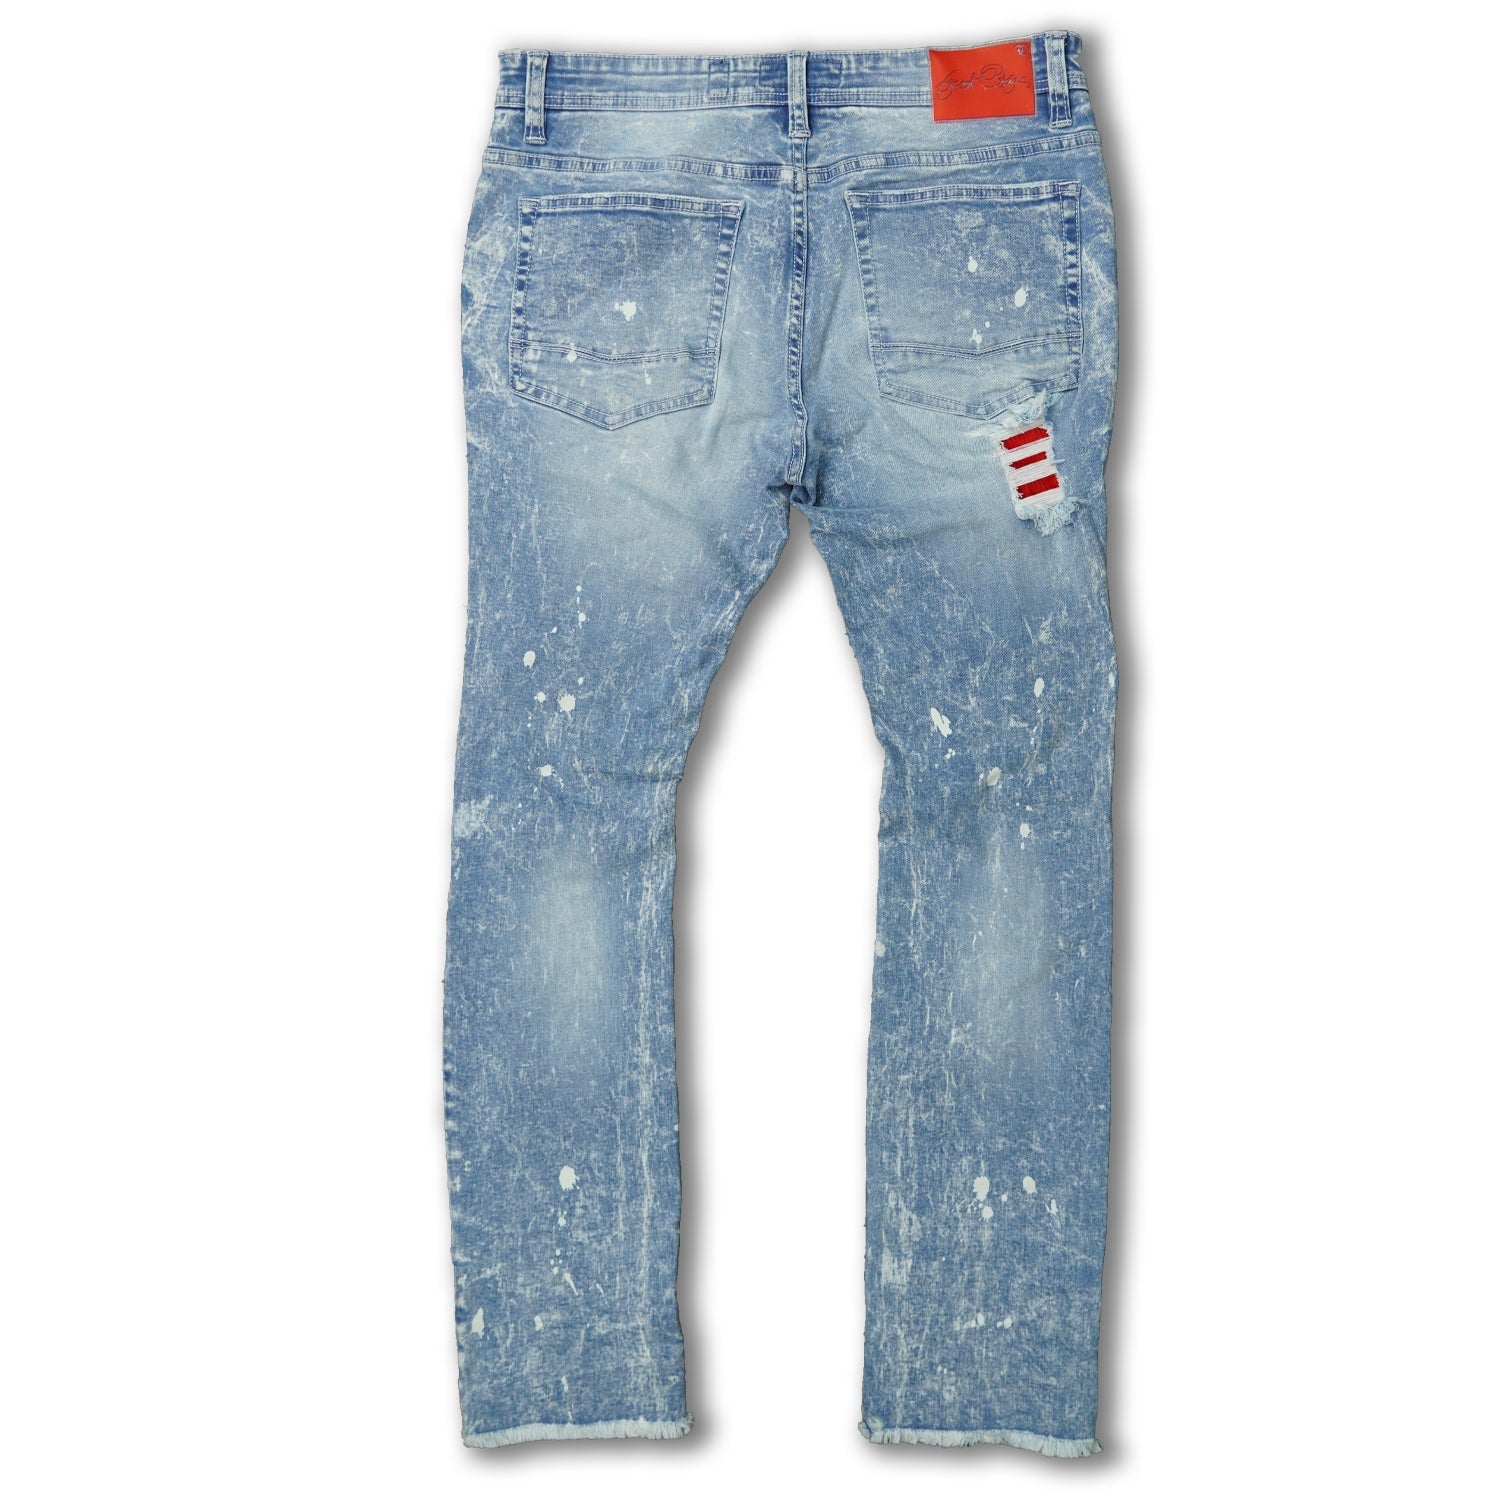 F1745 Shredded jeans w/ Cord Layer - Light wash